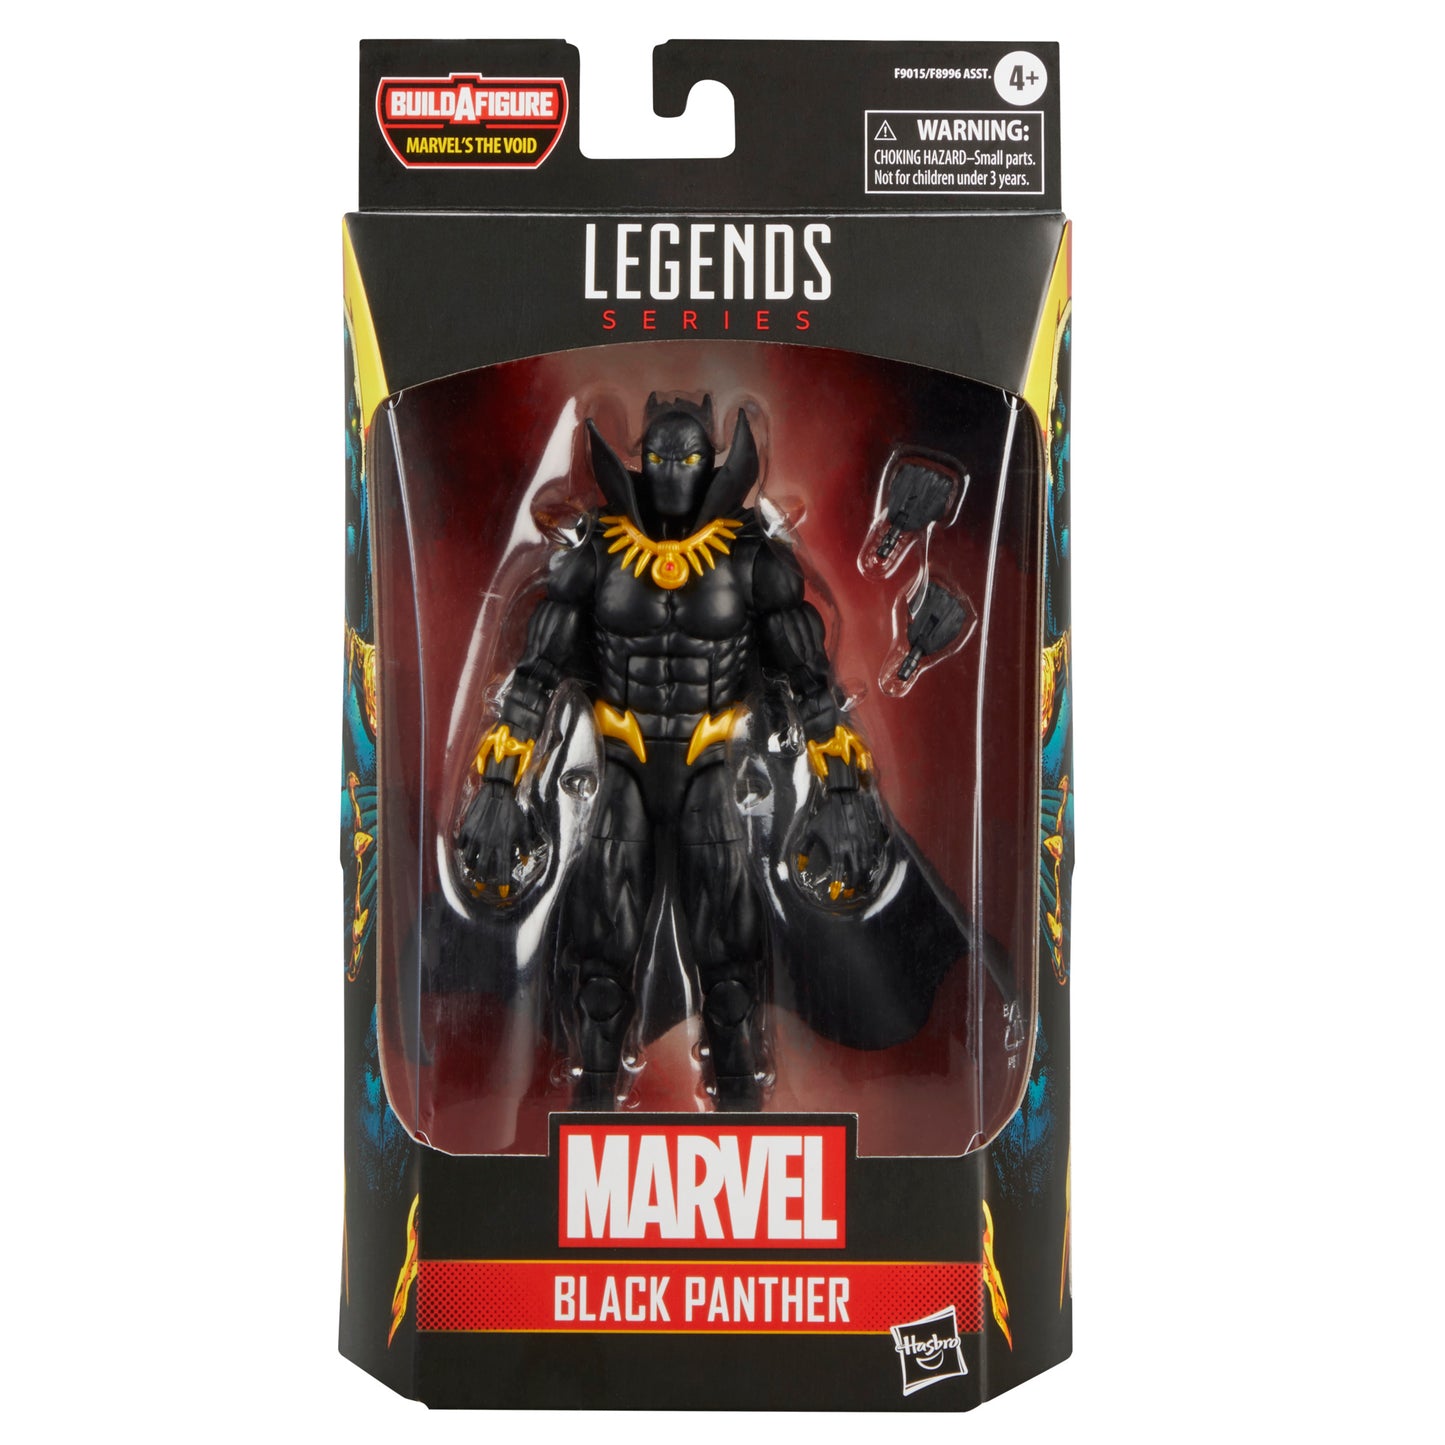 Marvel Legends Series Black Panther, 6" Comics Collectible Action Figure HERETOSERVEYOU